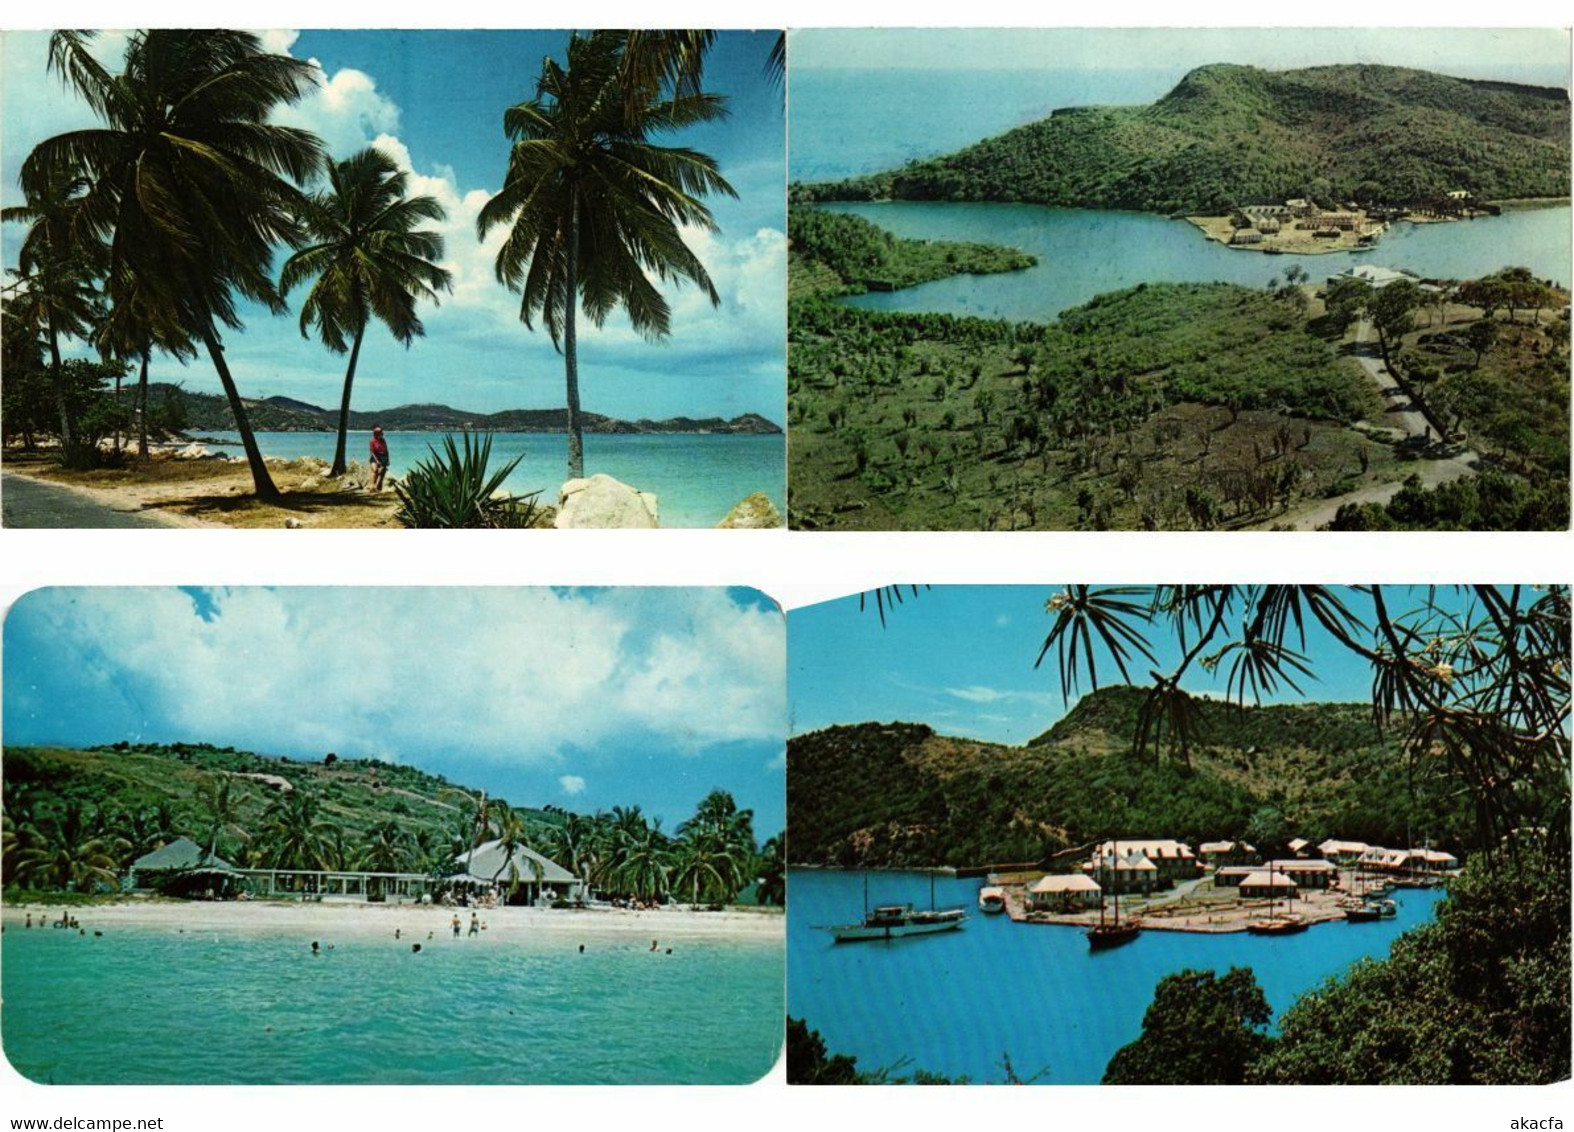 ANTIGUA BRITISH WEST INDIES CARIBBEAN 15 Vintage Postcards Pre-1970 (L2681) - Antigua Und Barbuda